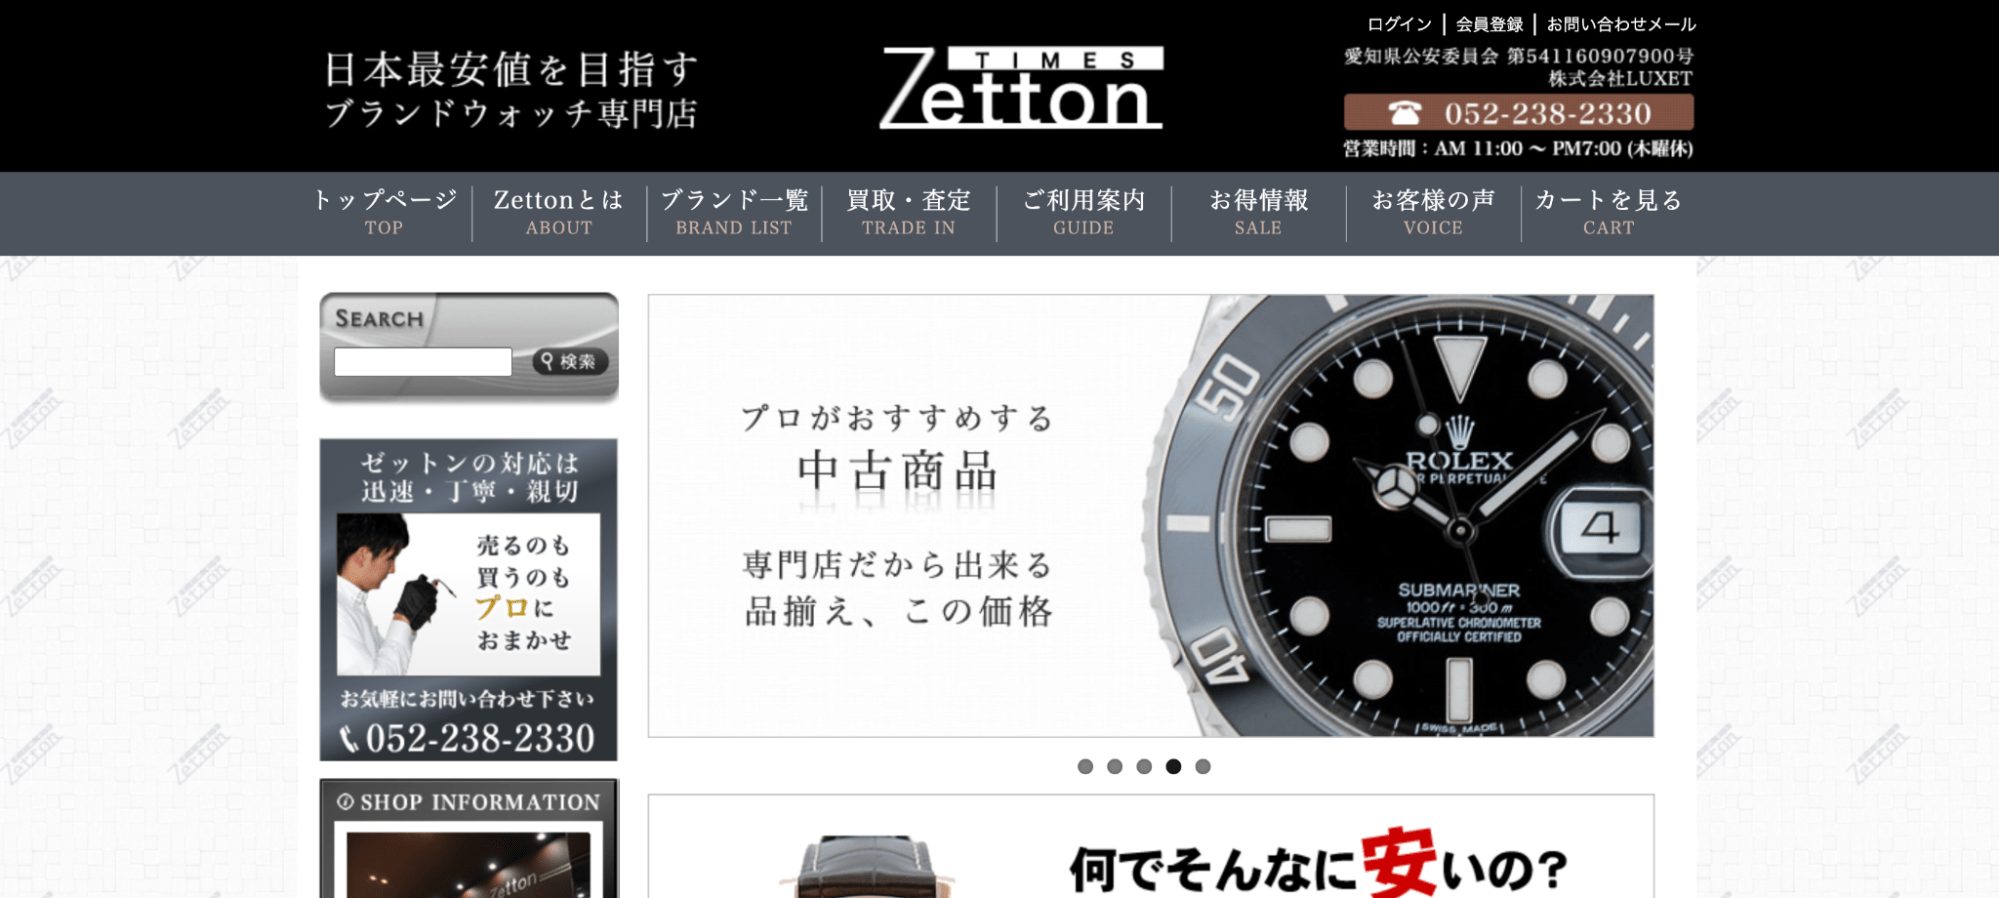 Zetton公式サイトのトップページ